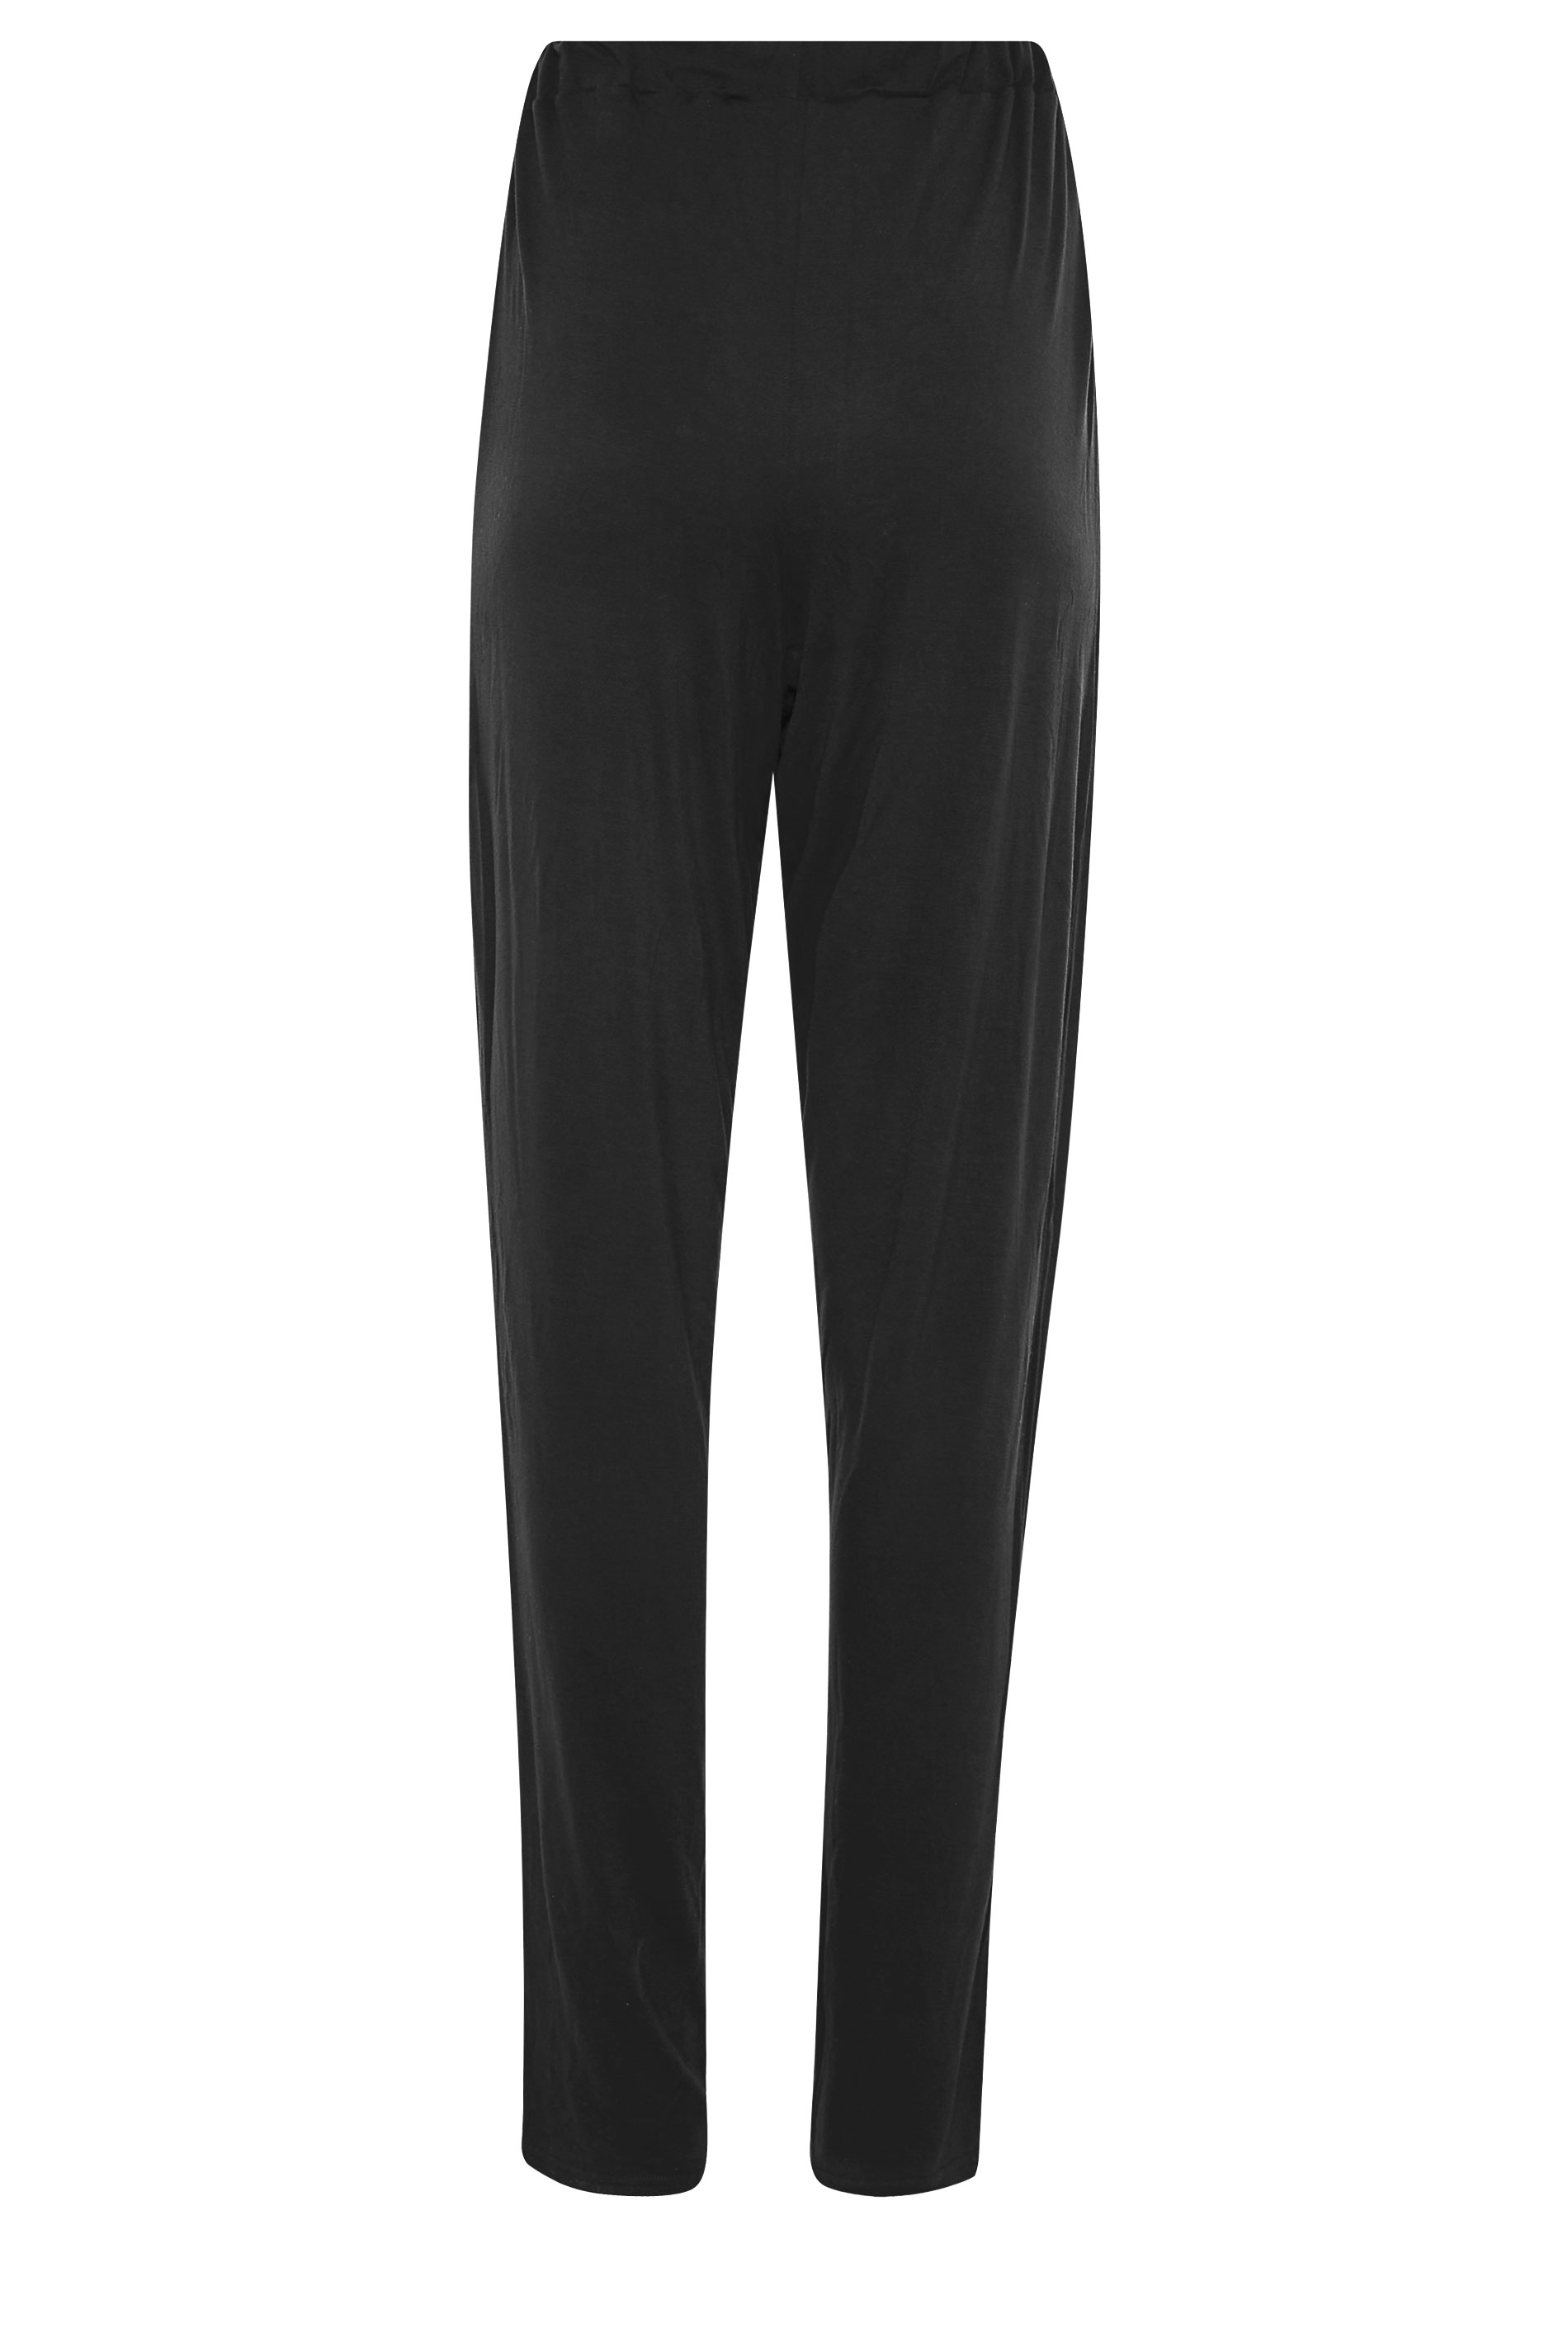 LTS Black Harem Trousers | Long Tall Sally